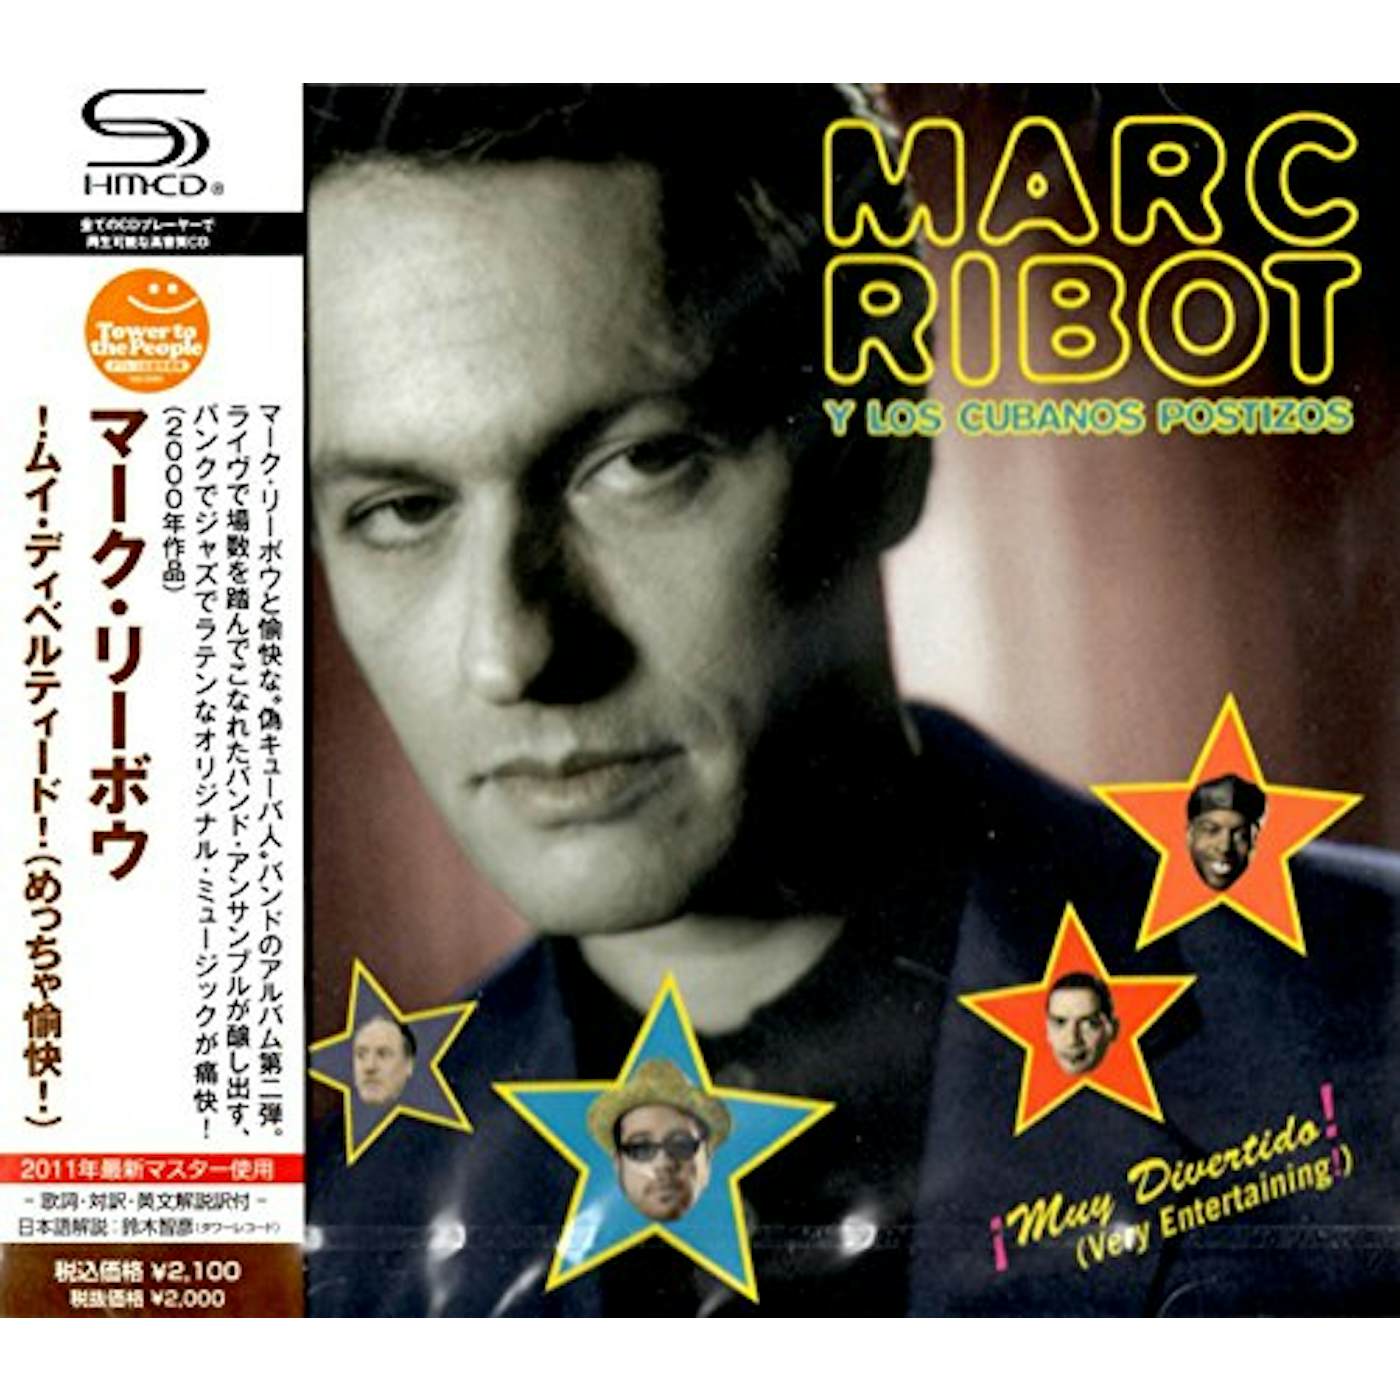 Marc Ribot MUY DIVERTIDO CD